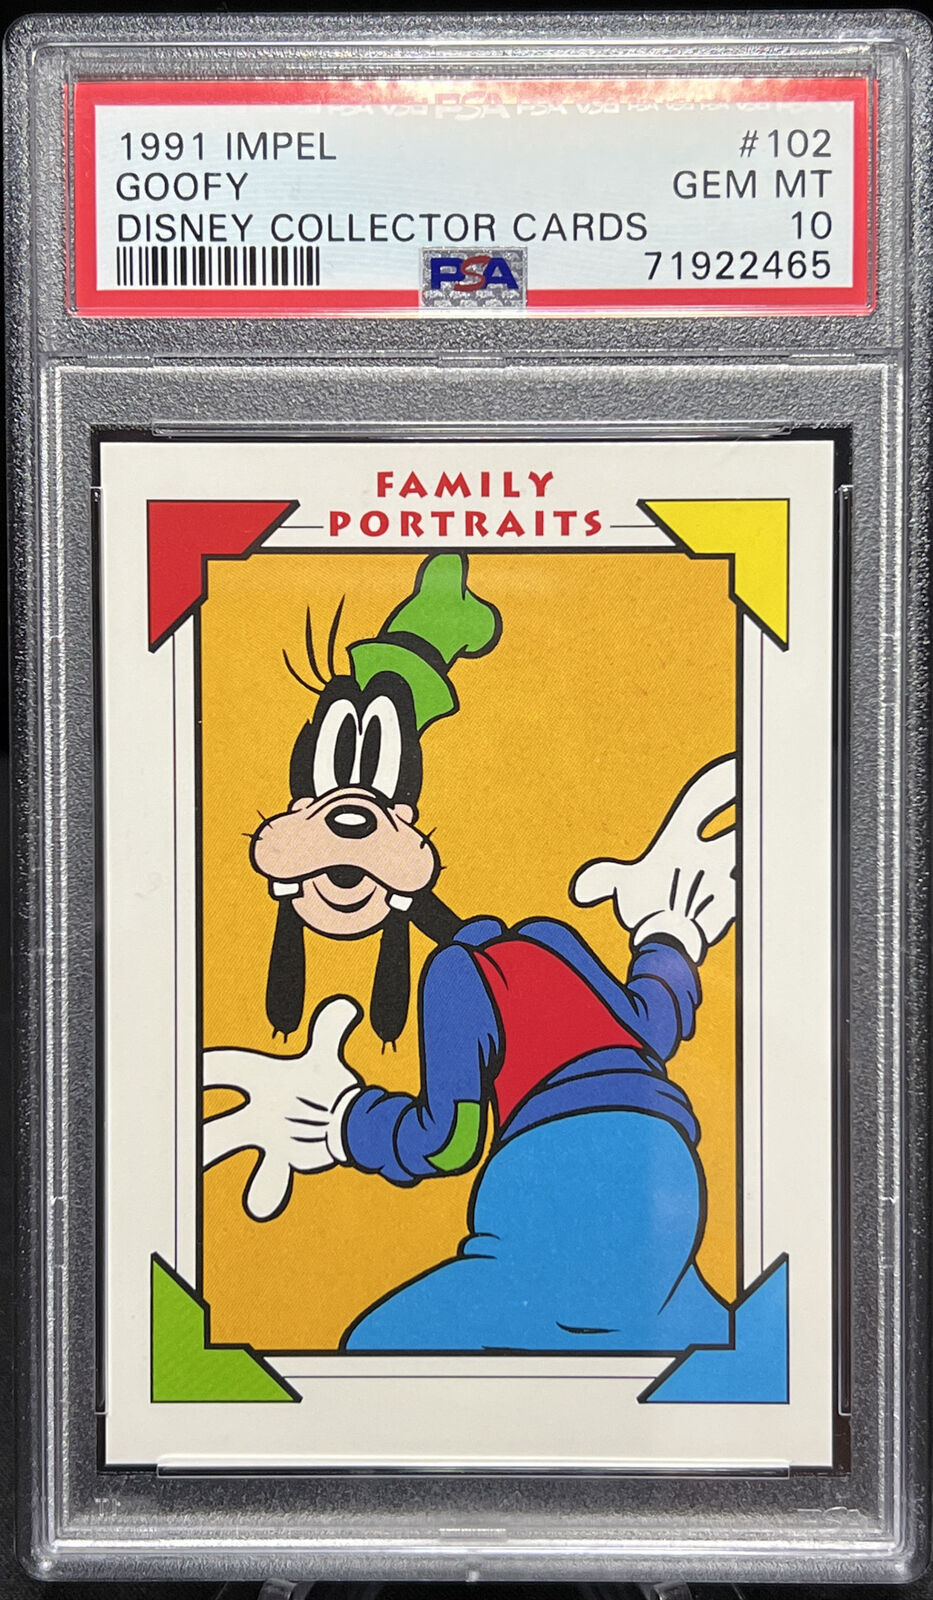 1991 Impel Disney Collector Cards Family Portraits Goofy #102 PSA 10